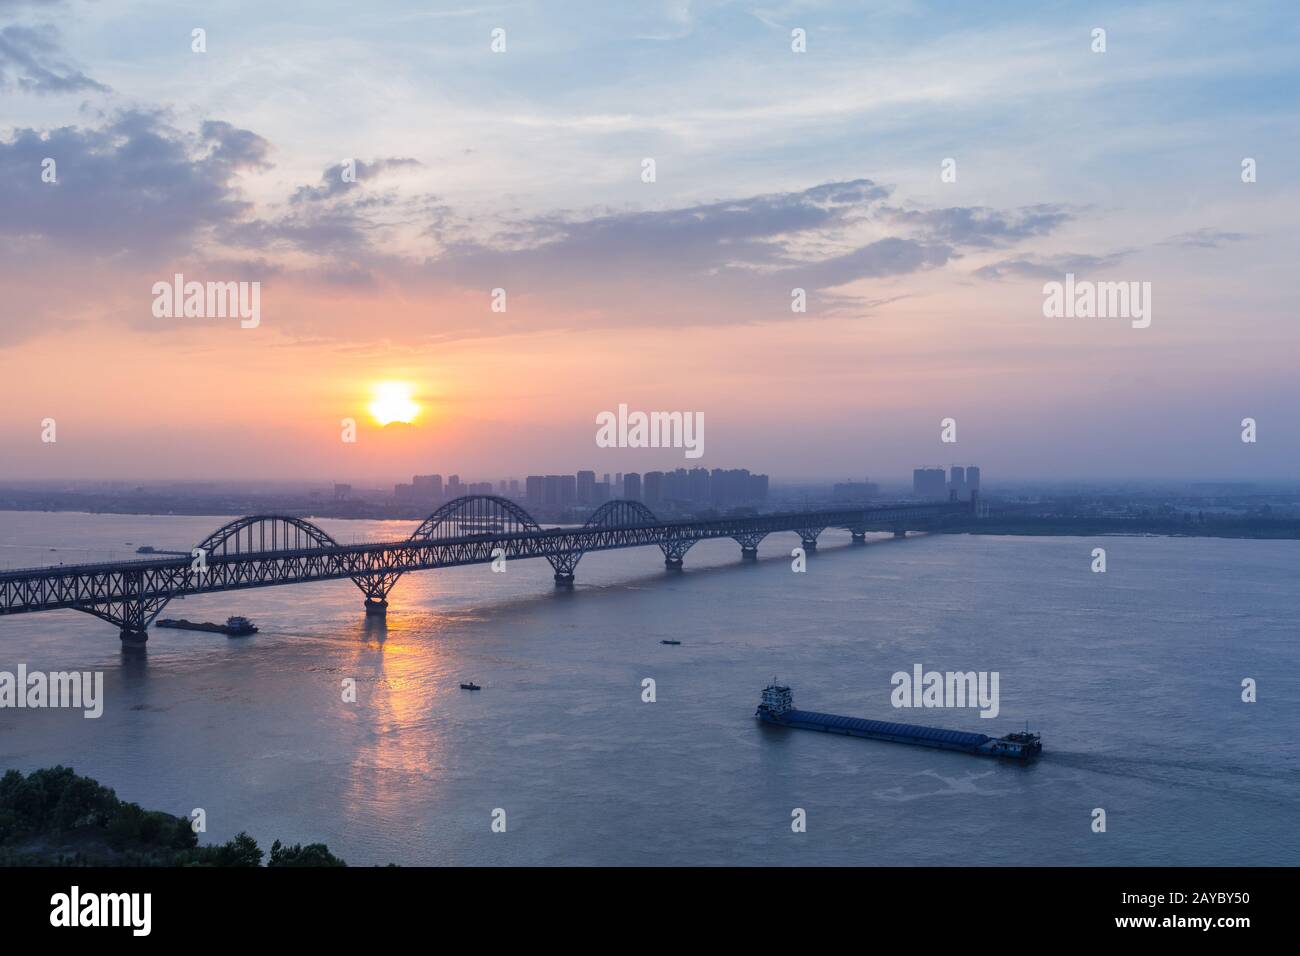 jiujiang yangtze river bridge in sunset Stock Photo